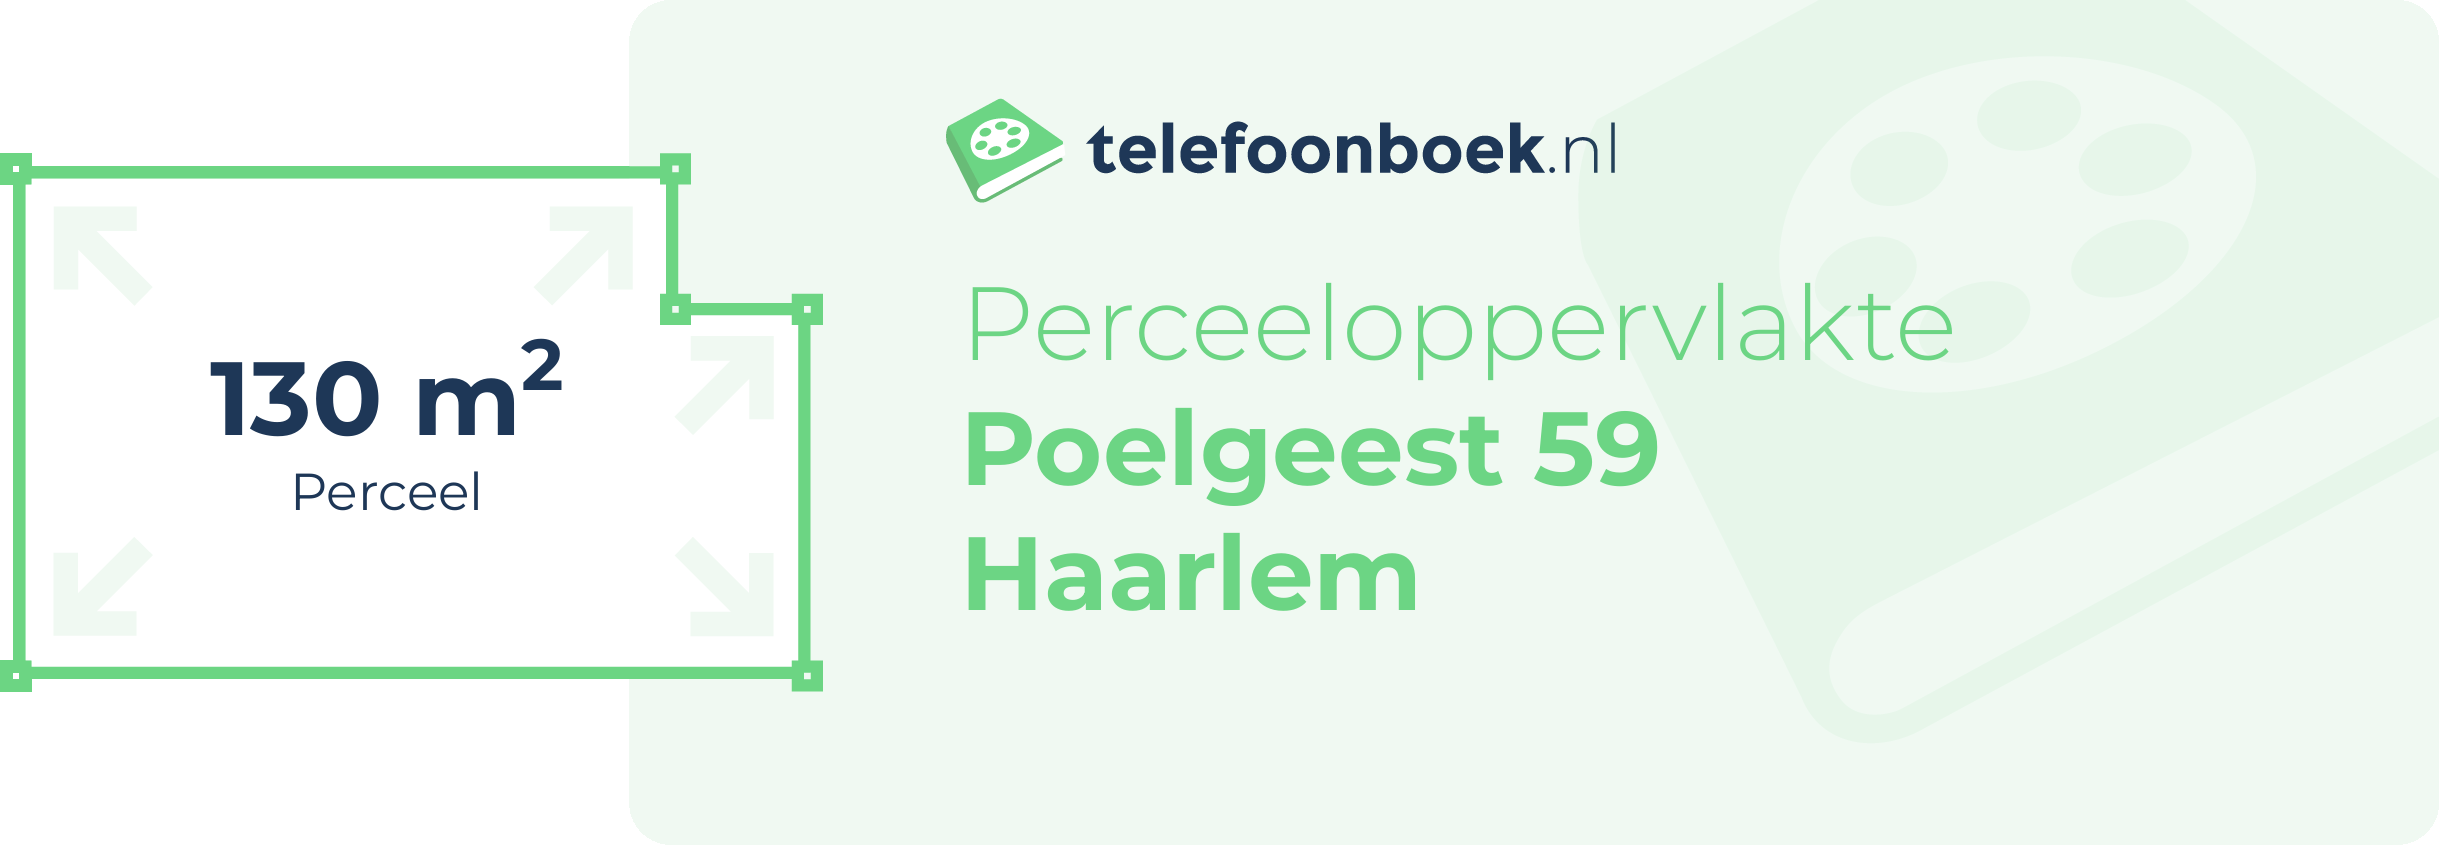 Perceeloppervlakte Poelgeest 59 Haarlem